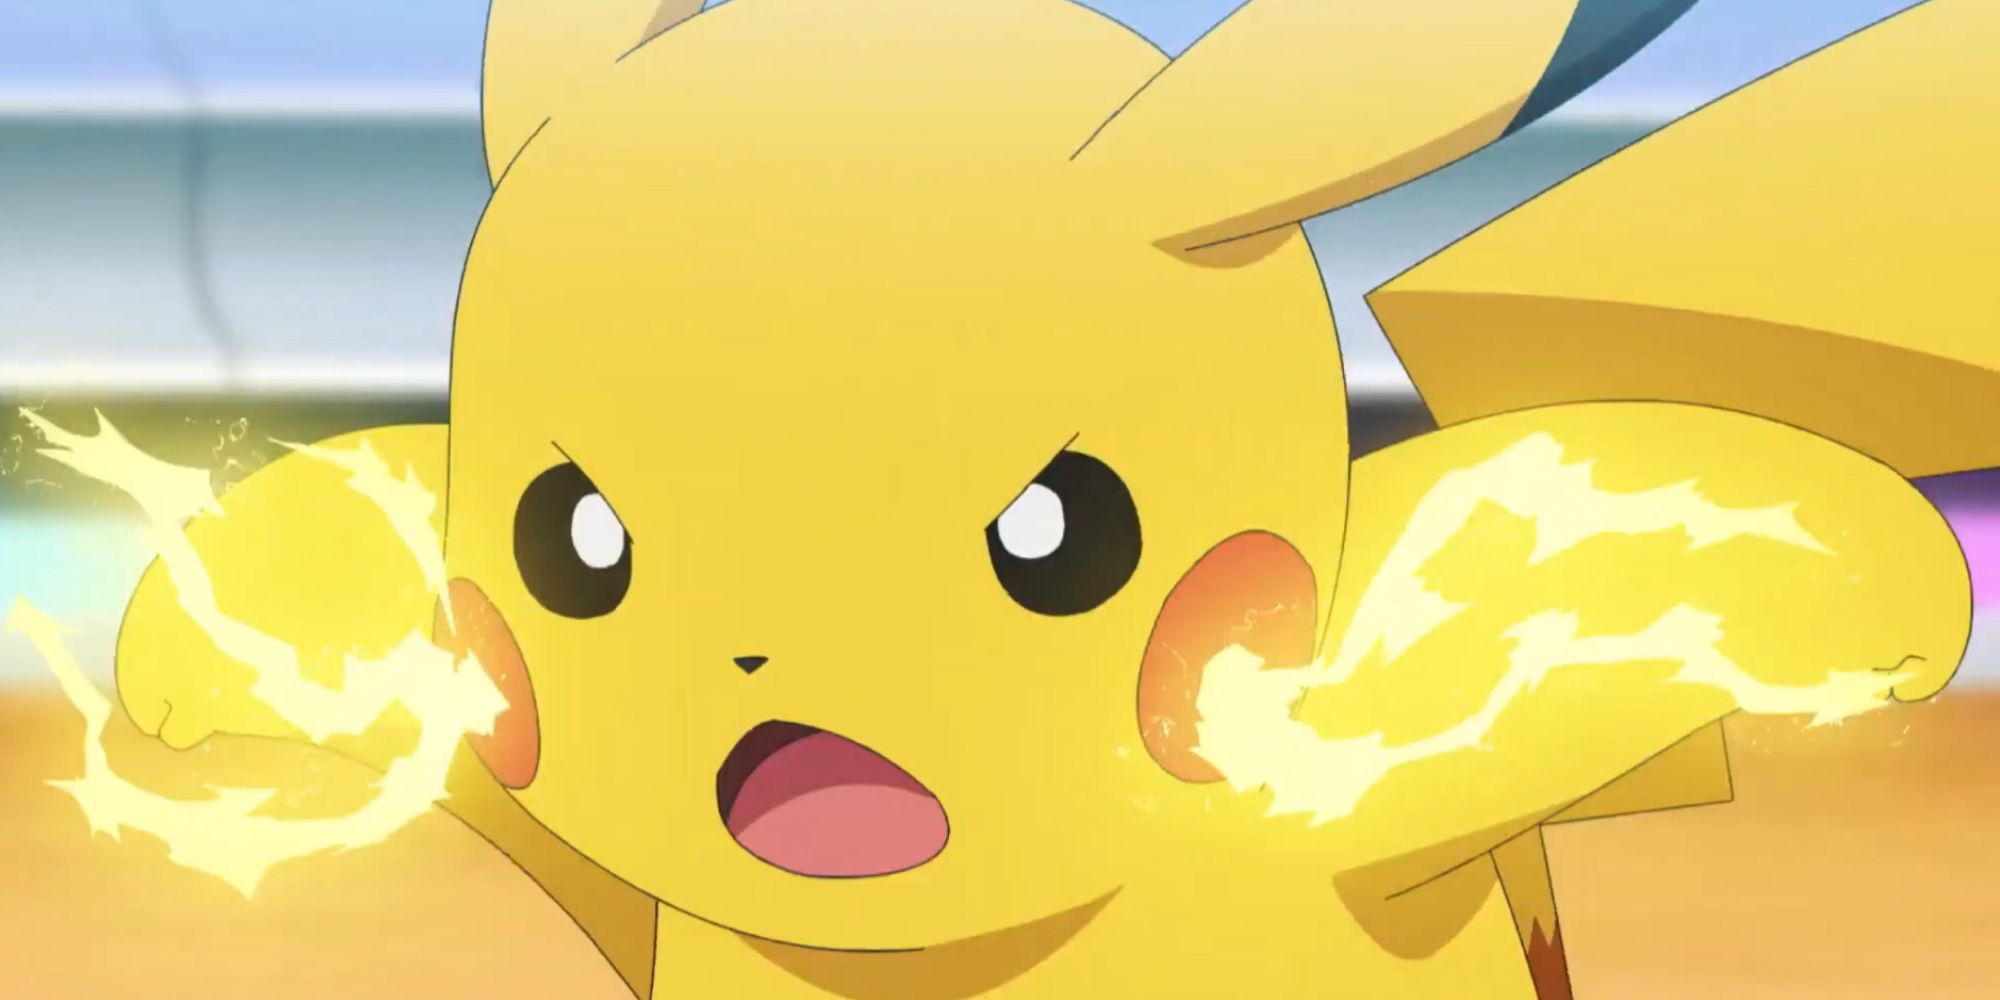 Limited Edition Pikachu Pokemon Card Sparks Mayhem At Van Gogh Museum